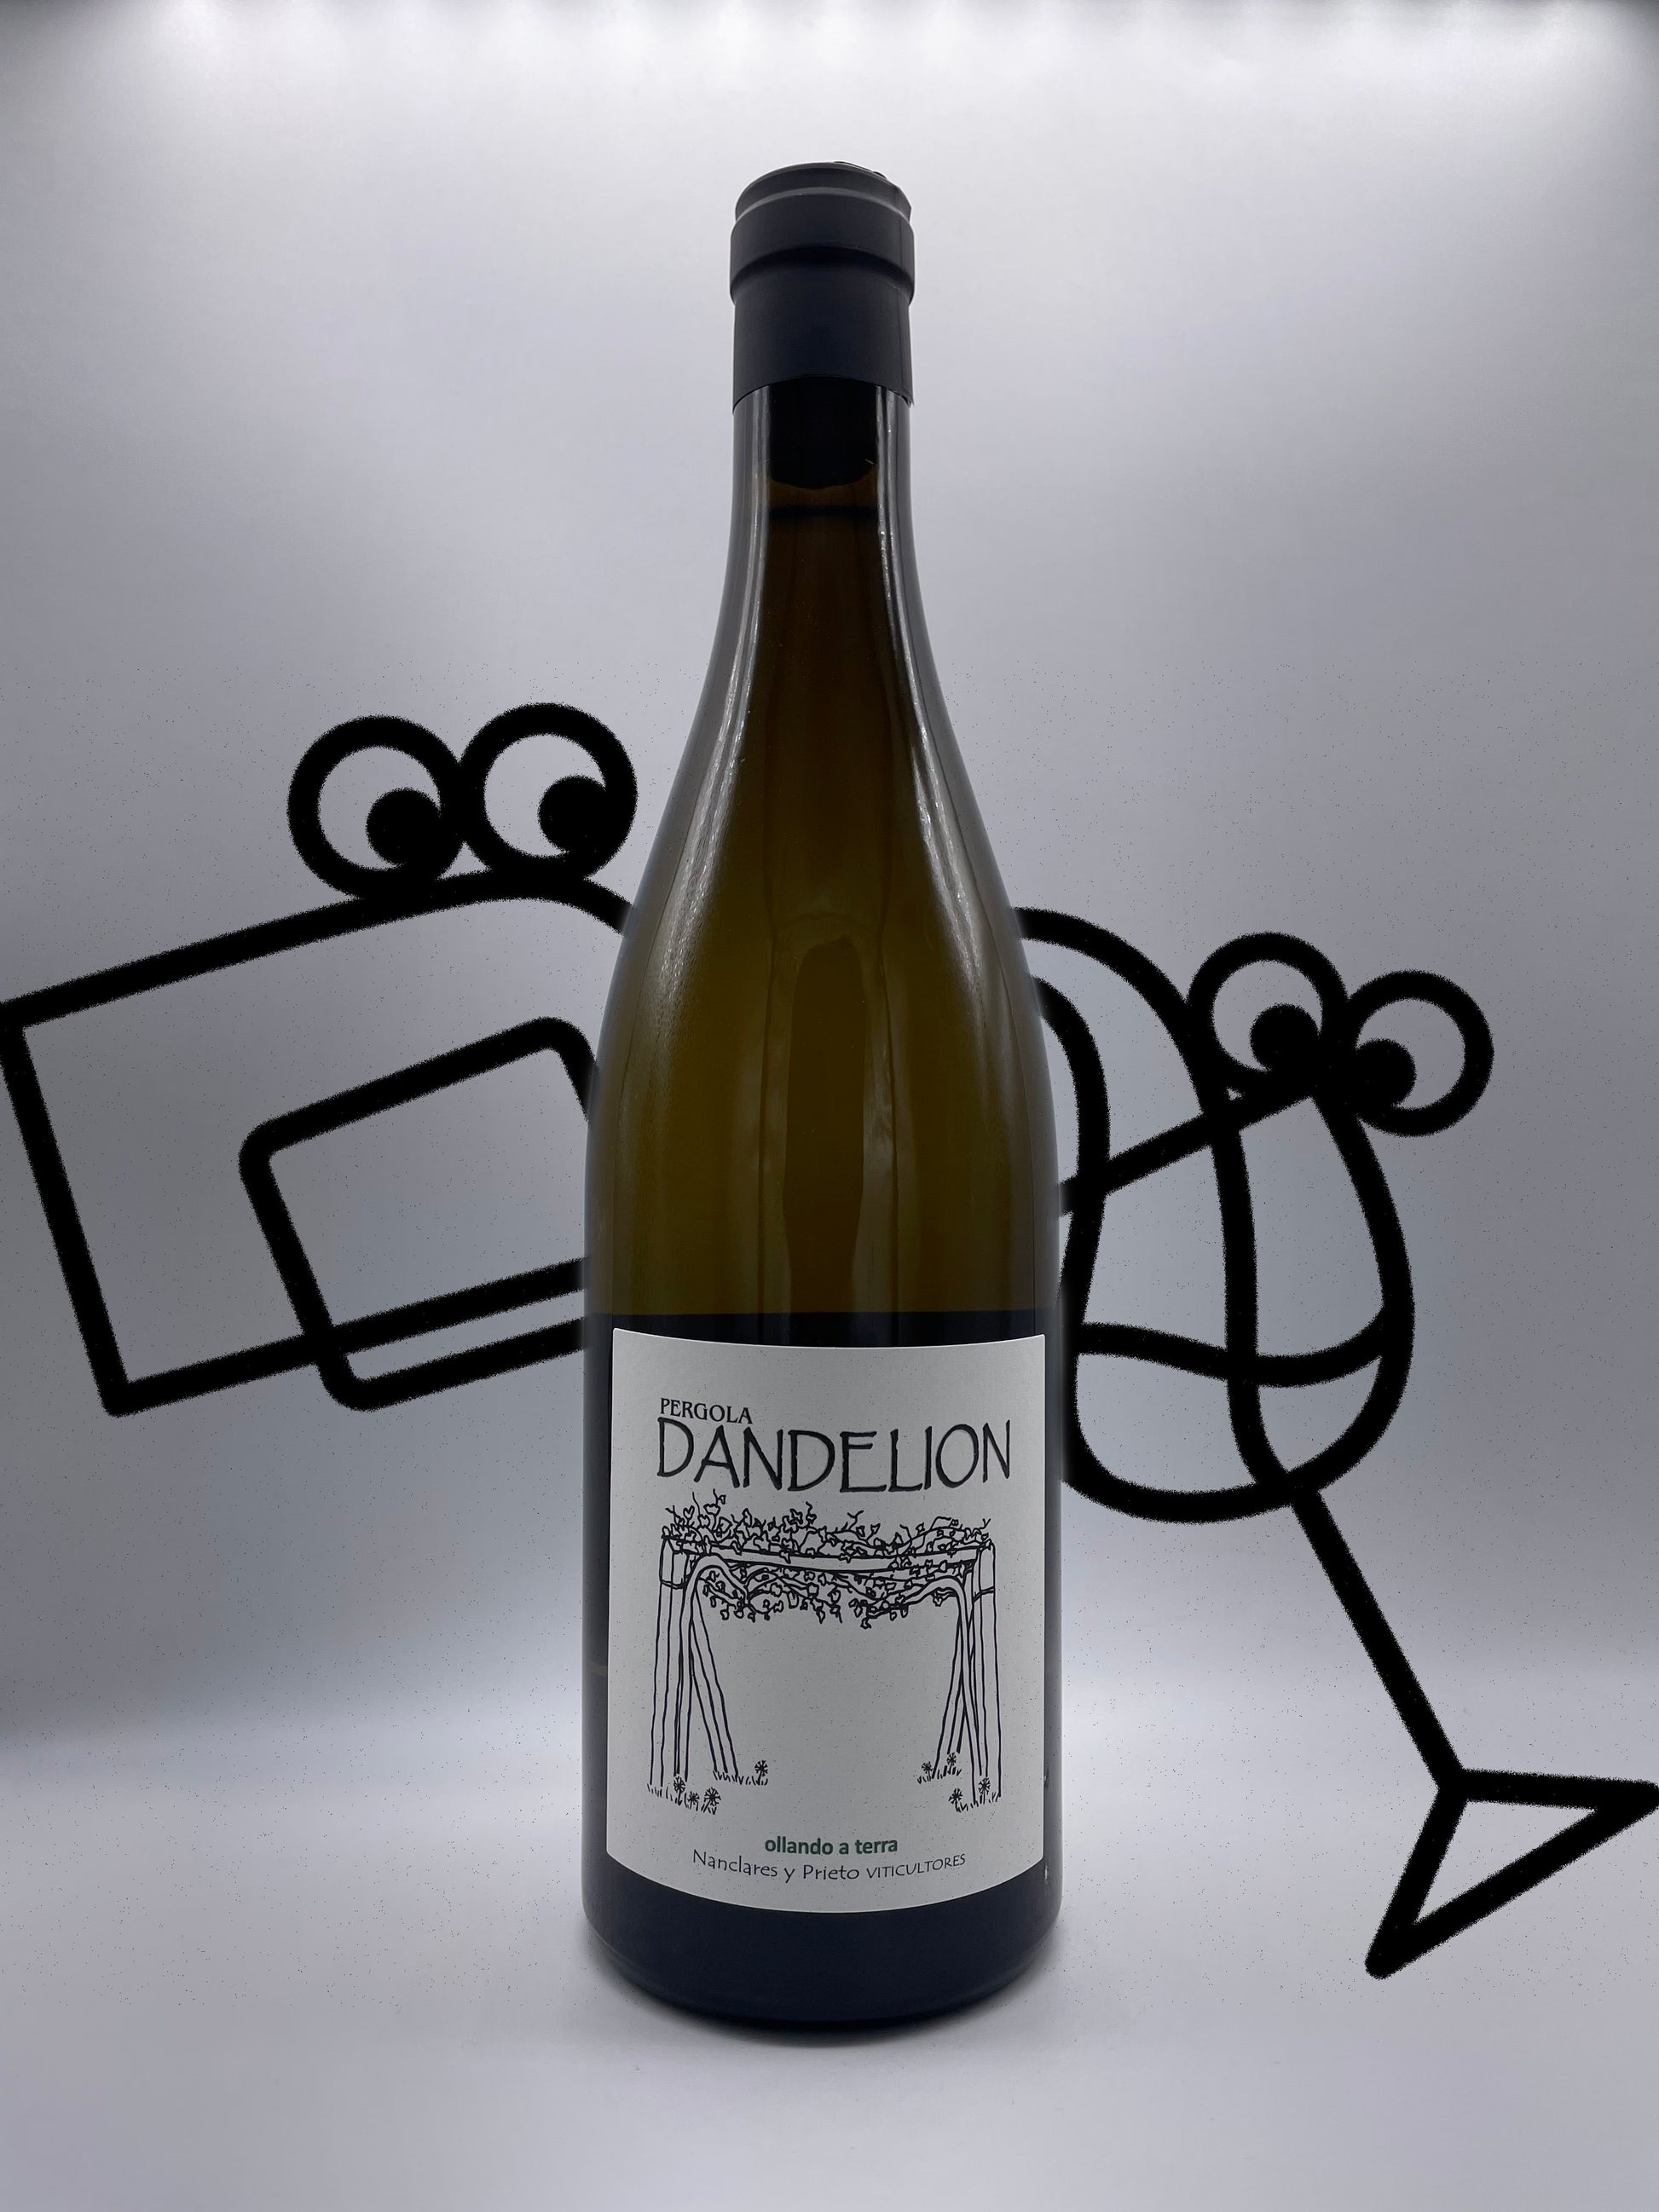 Nanclares Y Prieto 'Dandelion' Albarino Galicia, Spain Williston Park Wines